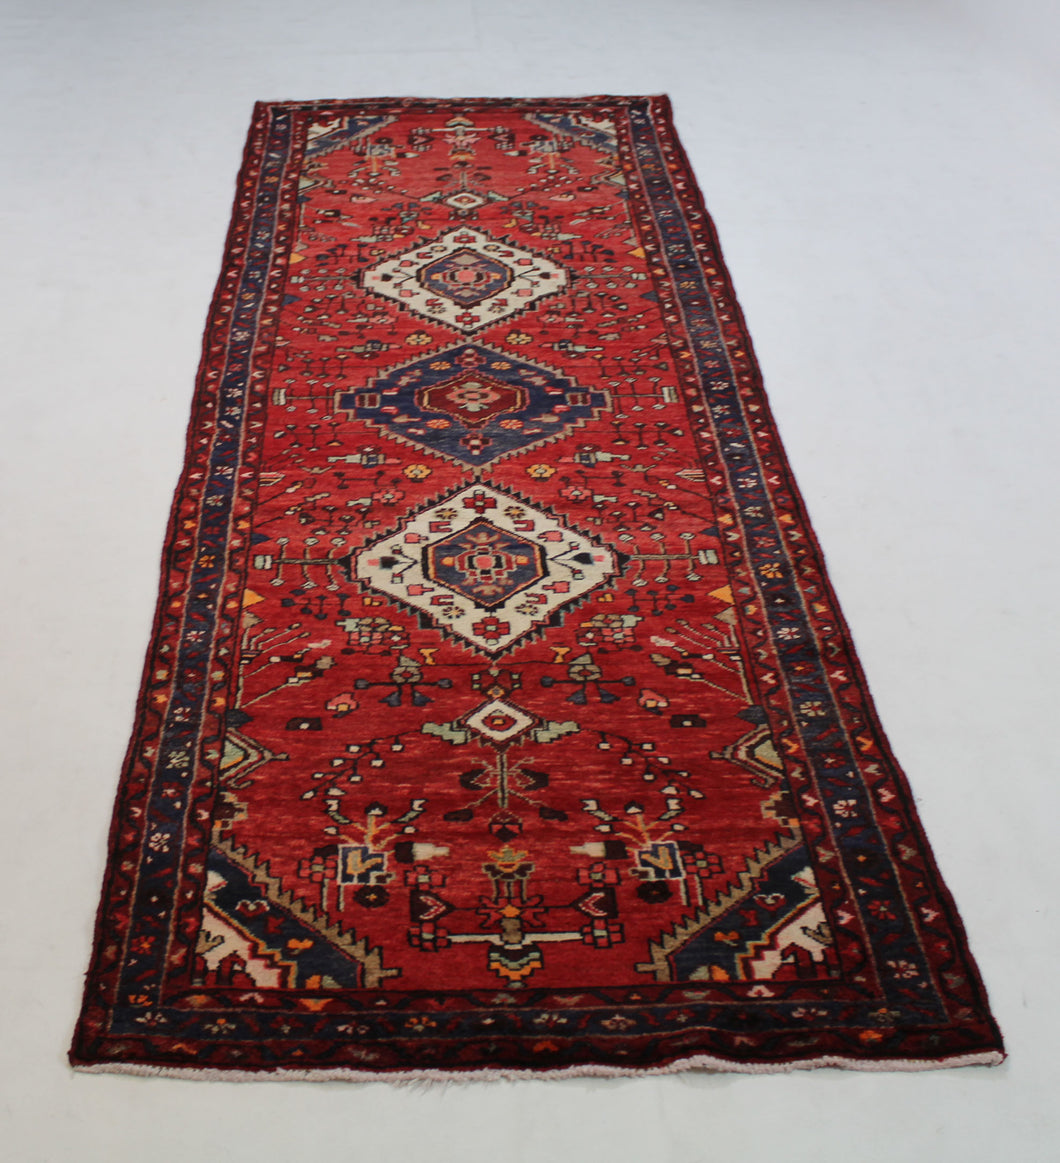 Handmade Antique, Vintage oriental Persian Hamedan rug - 280 X 100 cm